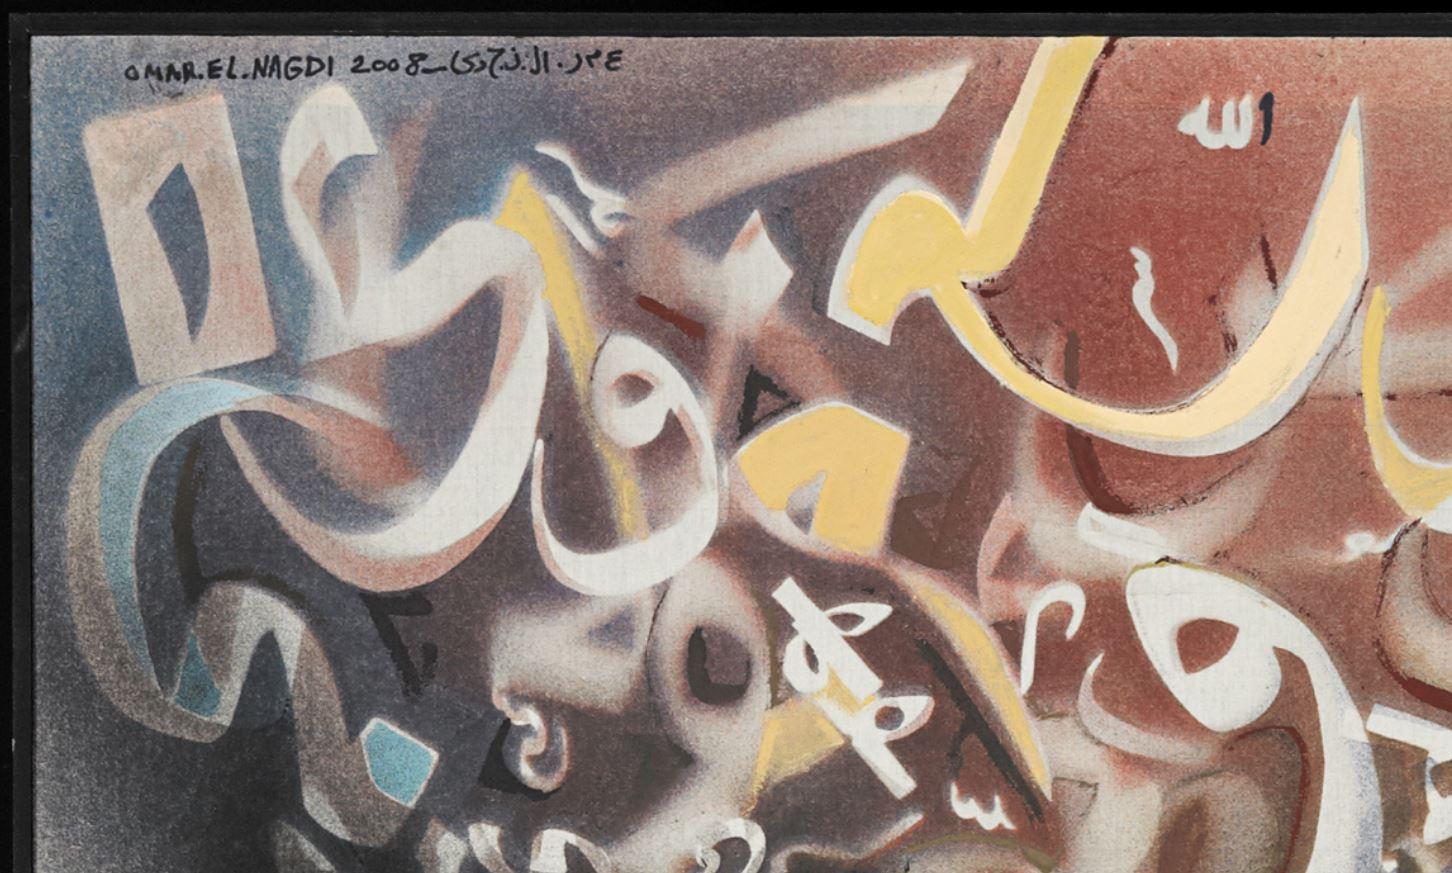 Untitled - Modern, Mix Media on Canvas, Early 21st Century - Symbolist Mixed Media Art by Omar El-Nagdi